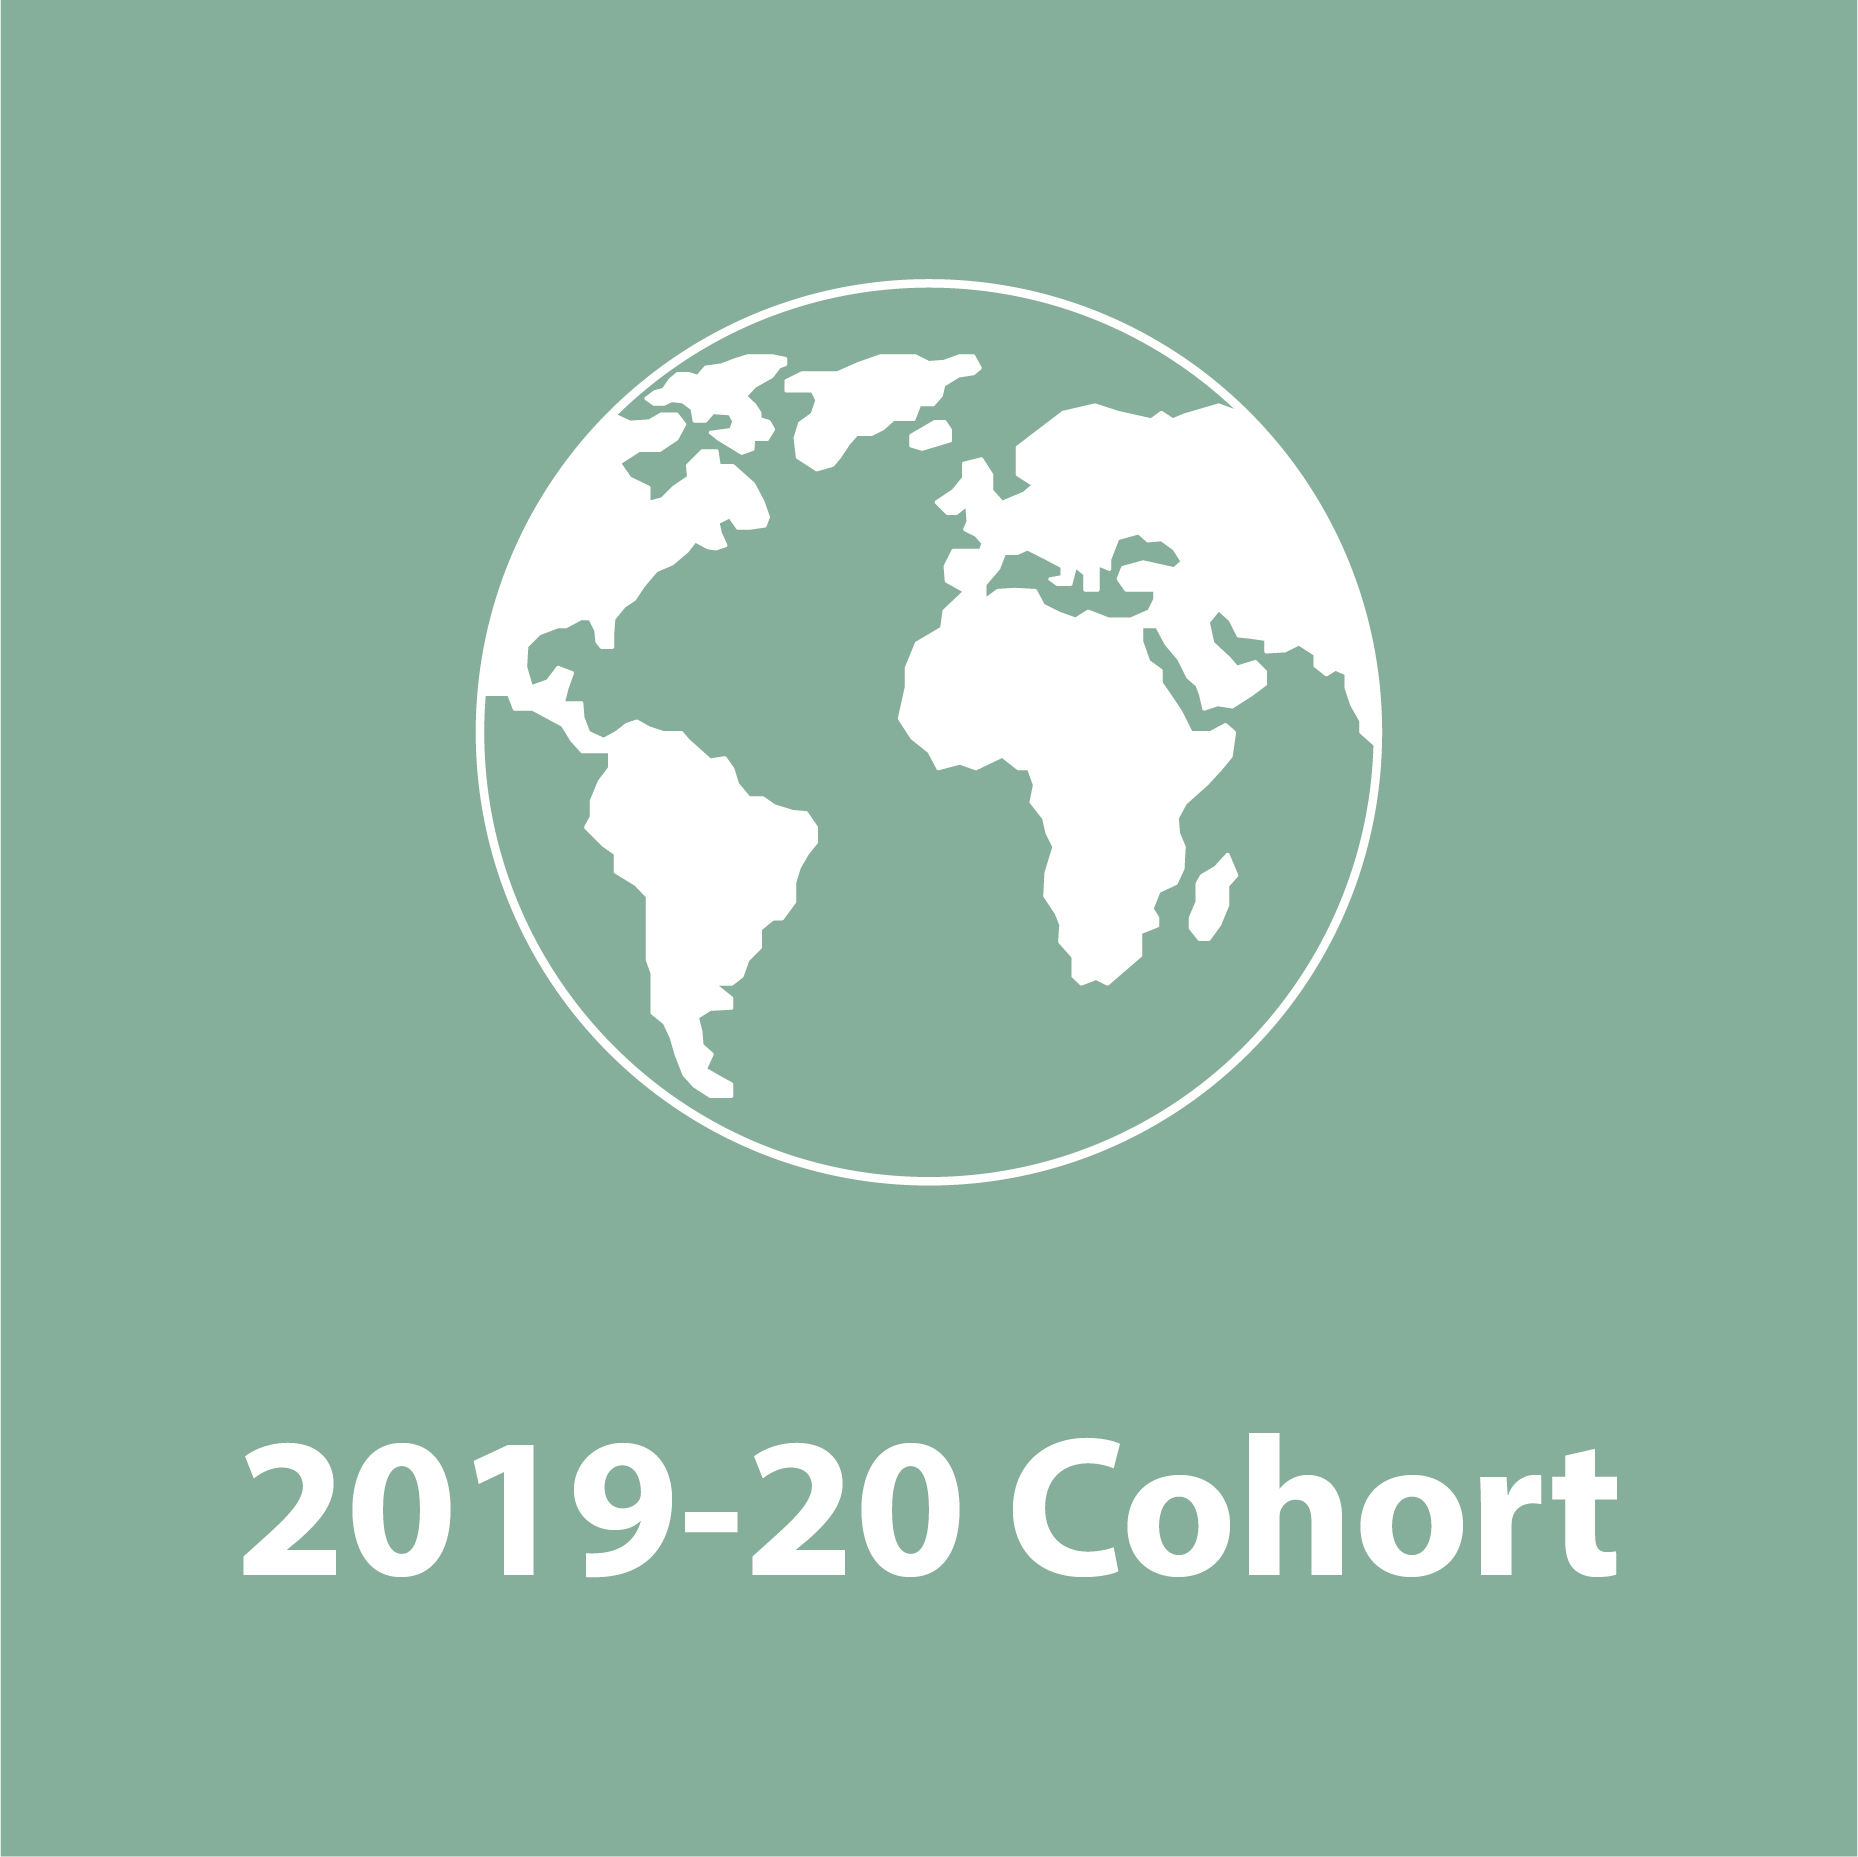 Borysiewicz Fellows 2019-20 Cohort